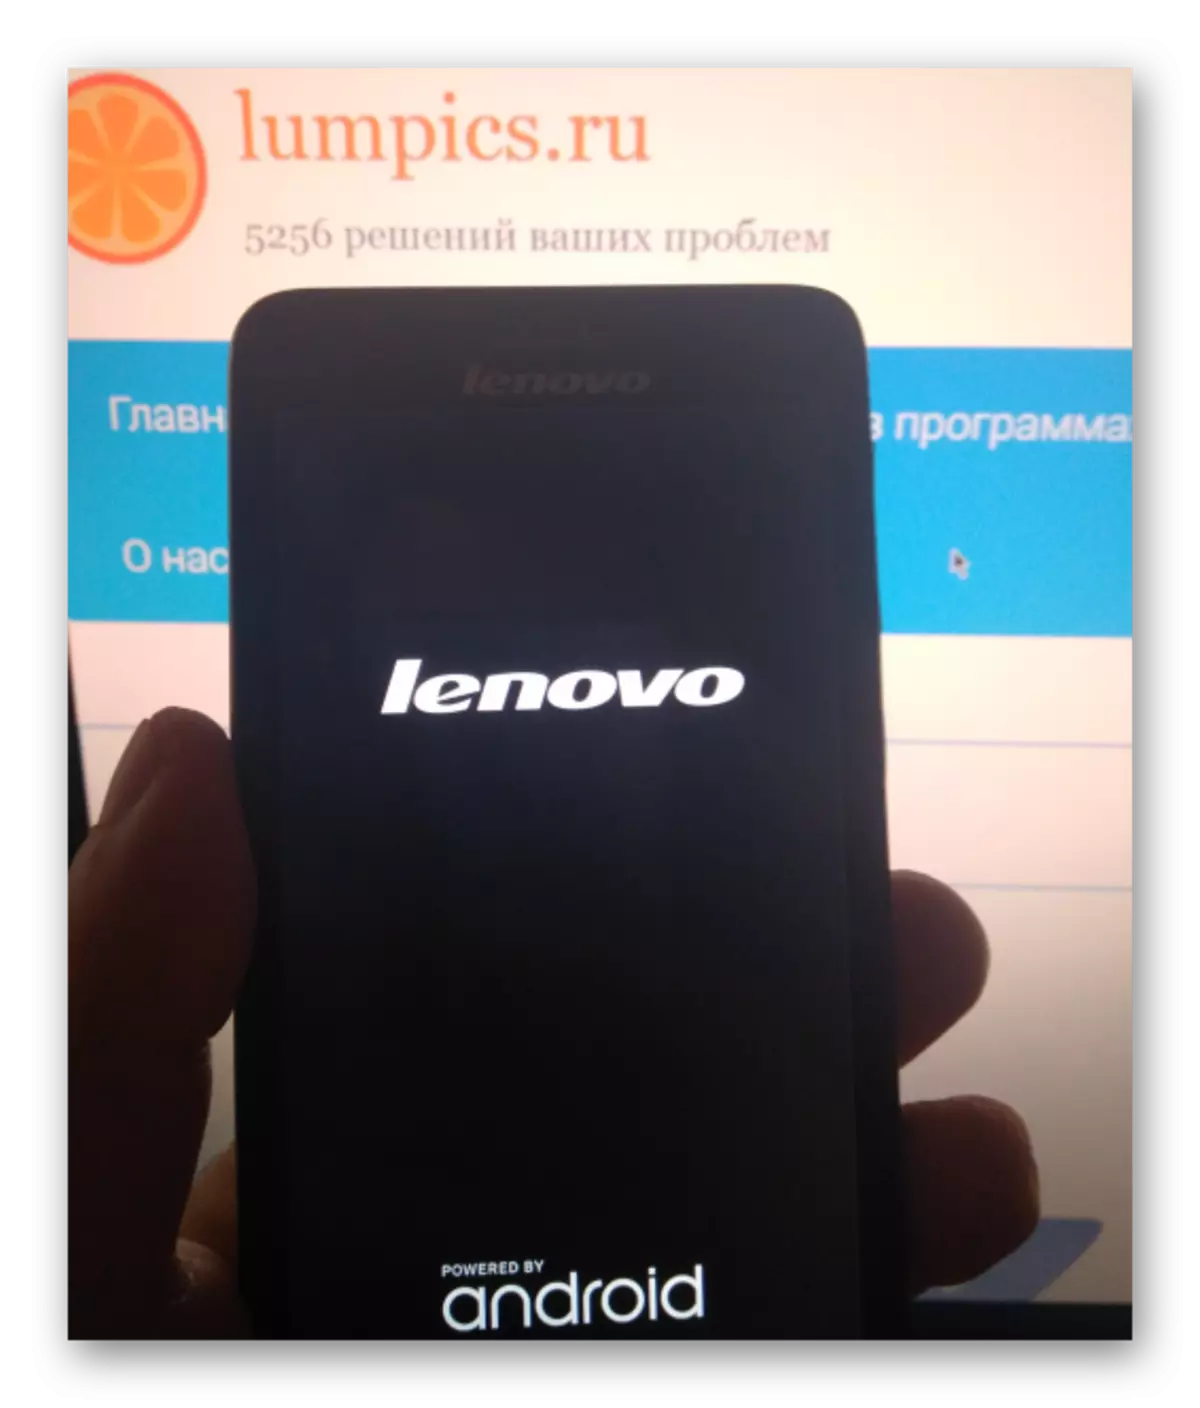 Firmware Lenovo S660. 3108_42